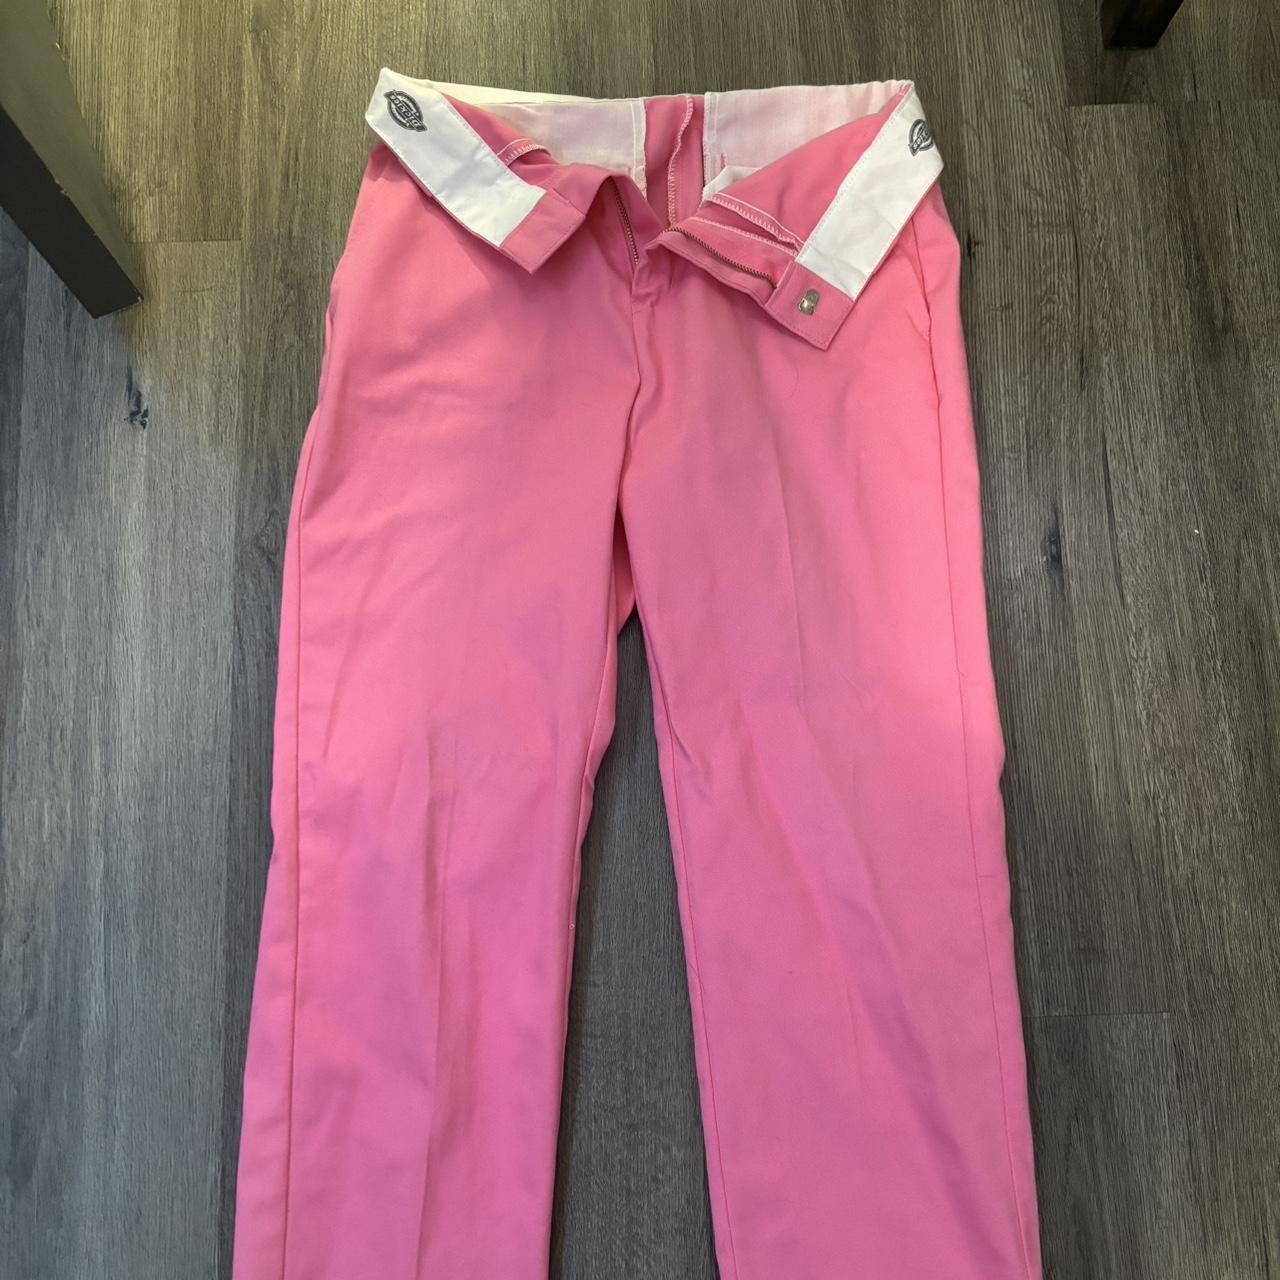 Bubble gum pink dickies 874 work pants size 2 fits... - Depop